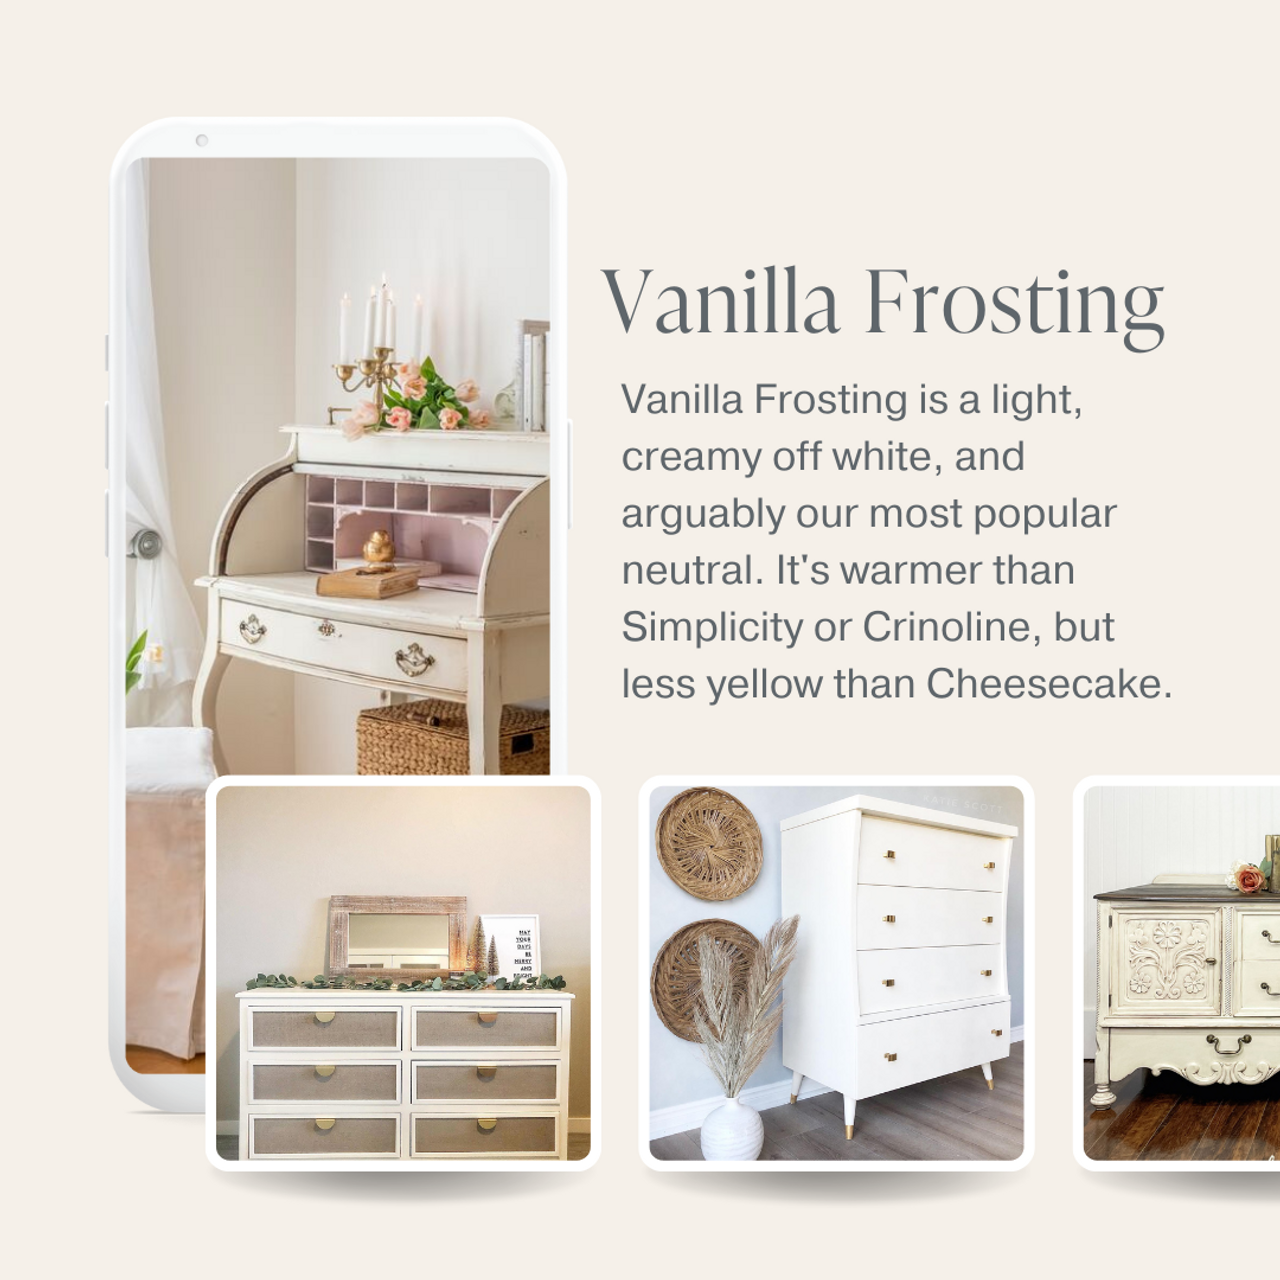 Vanilla Frosting Bookshelf - Country Chic Paint